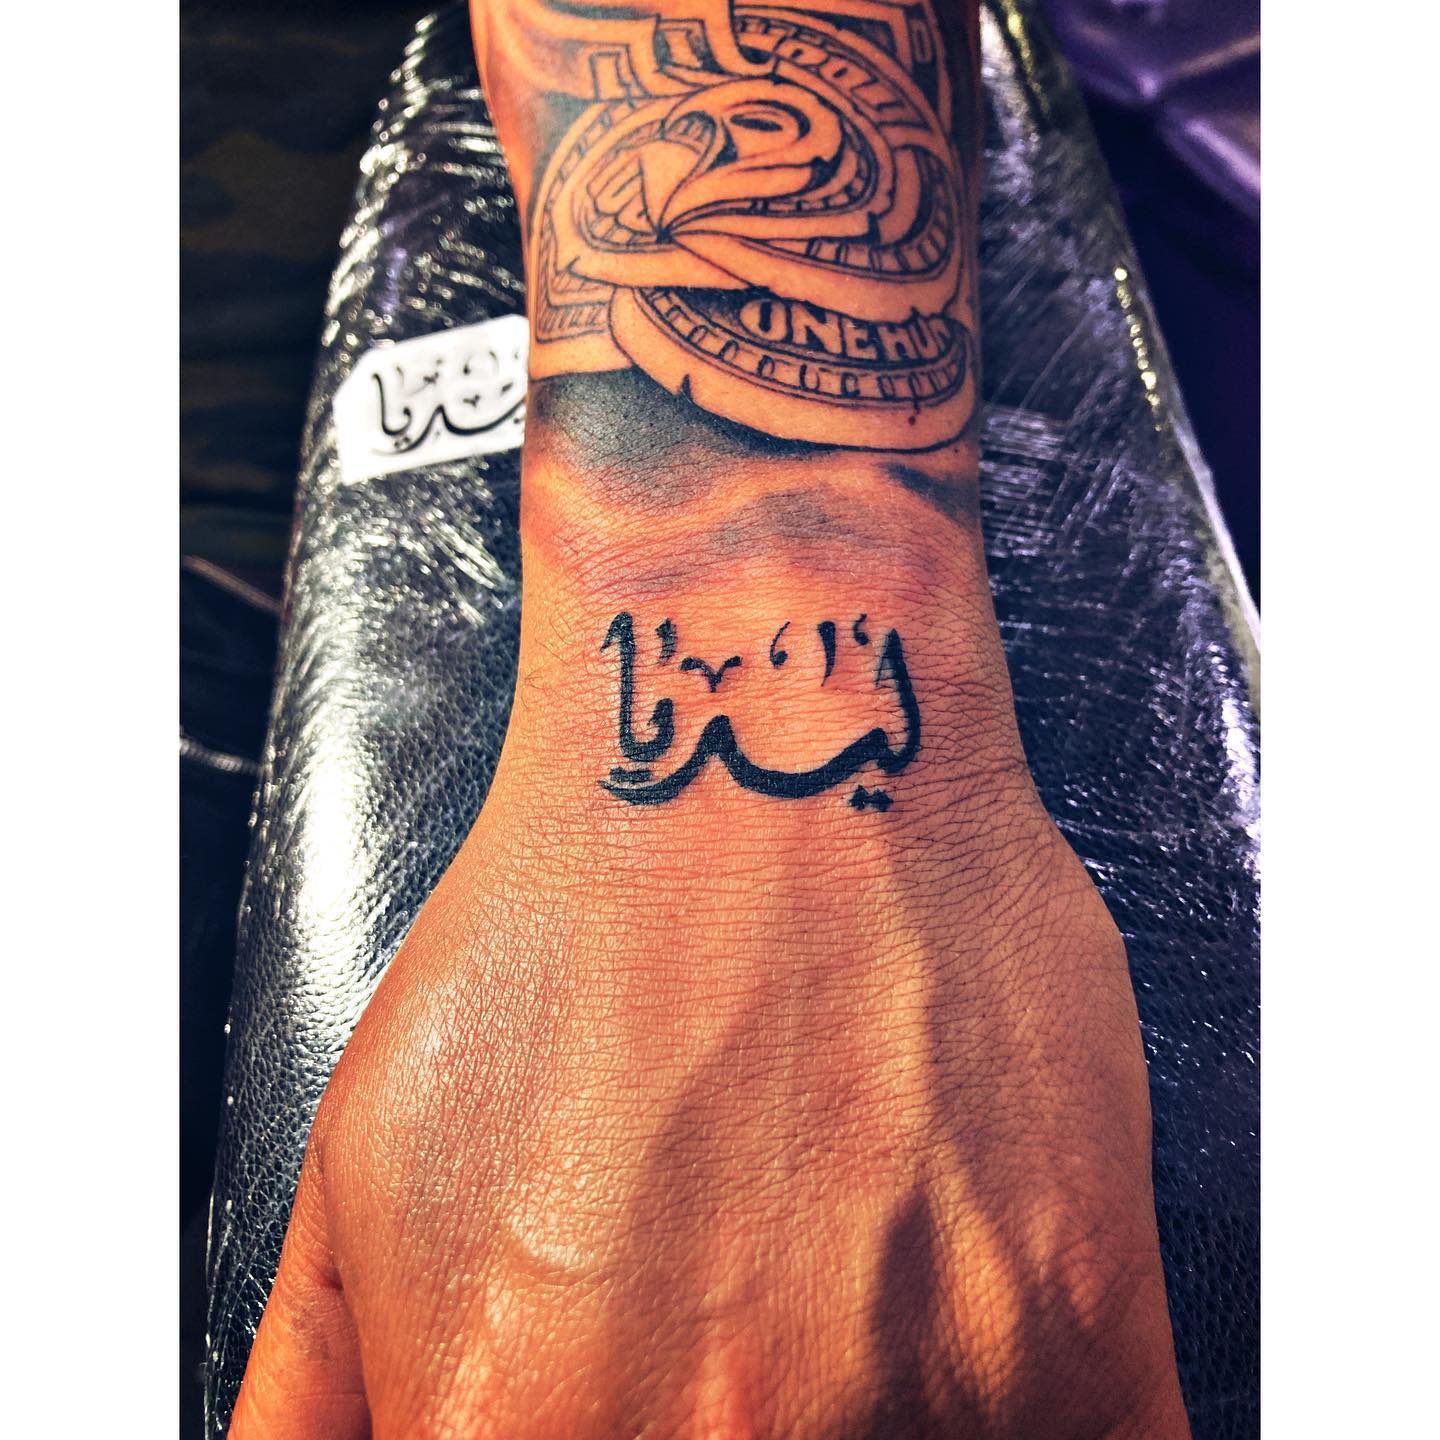 Top More Than Arabic Tattoos Men Latest Vova Edu Vn